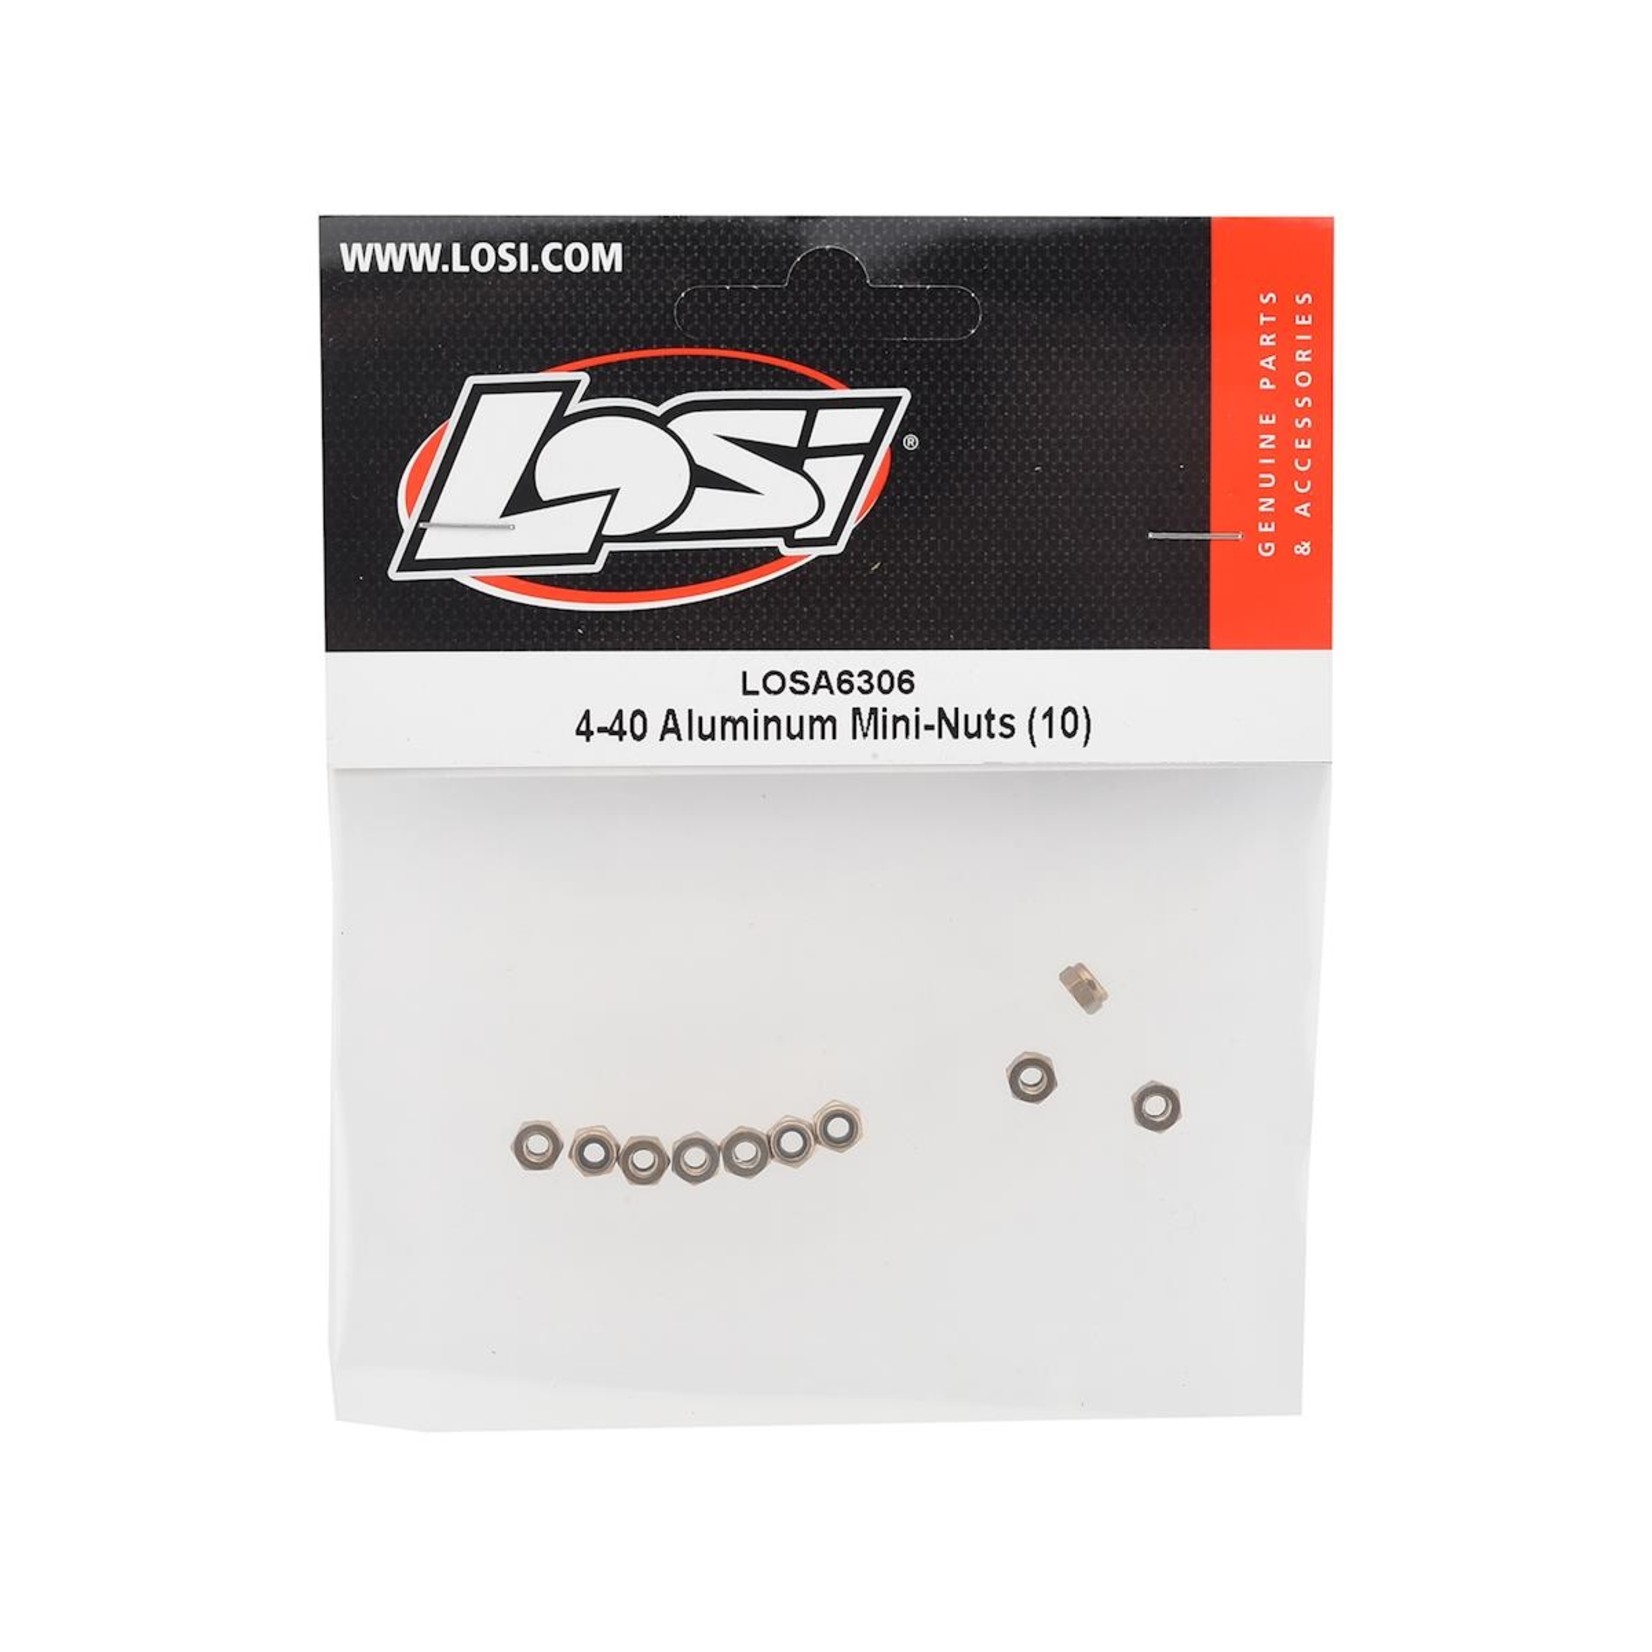 Losi Losi 4-40 Aluminum Mini Nuts (10) #LOSA6306